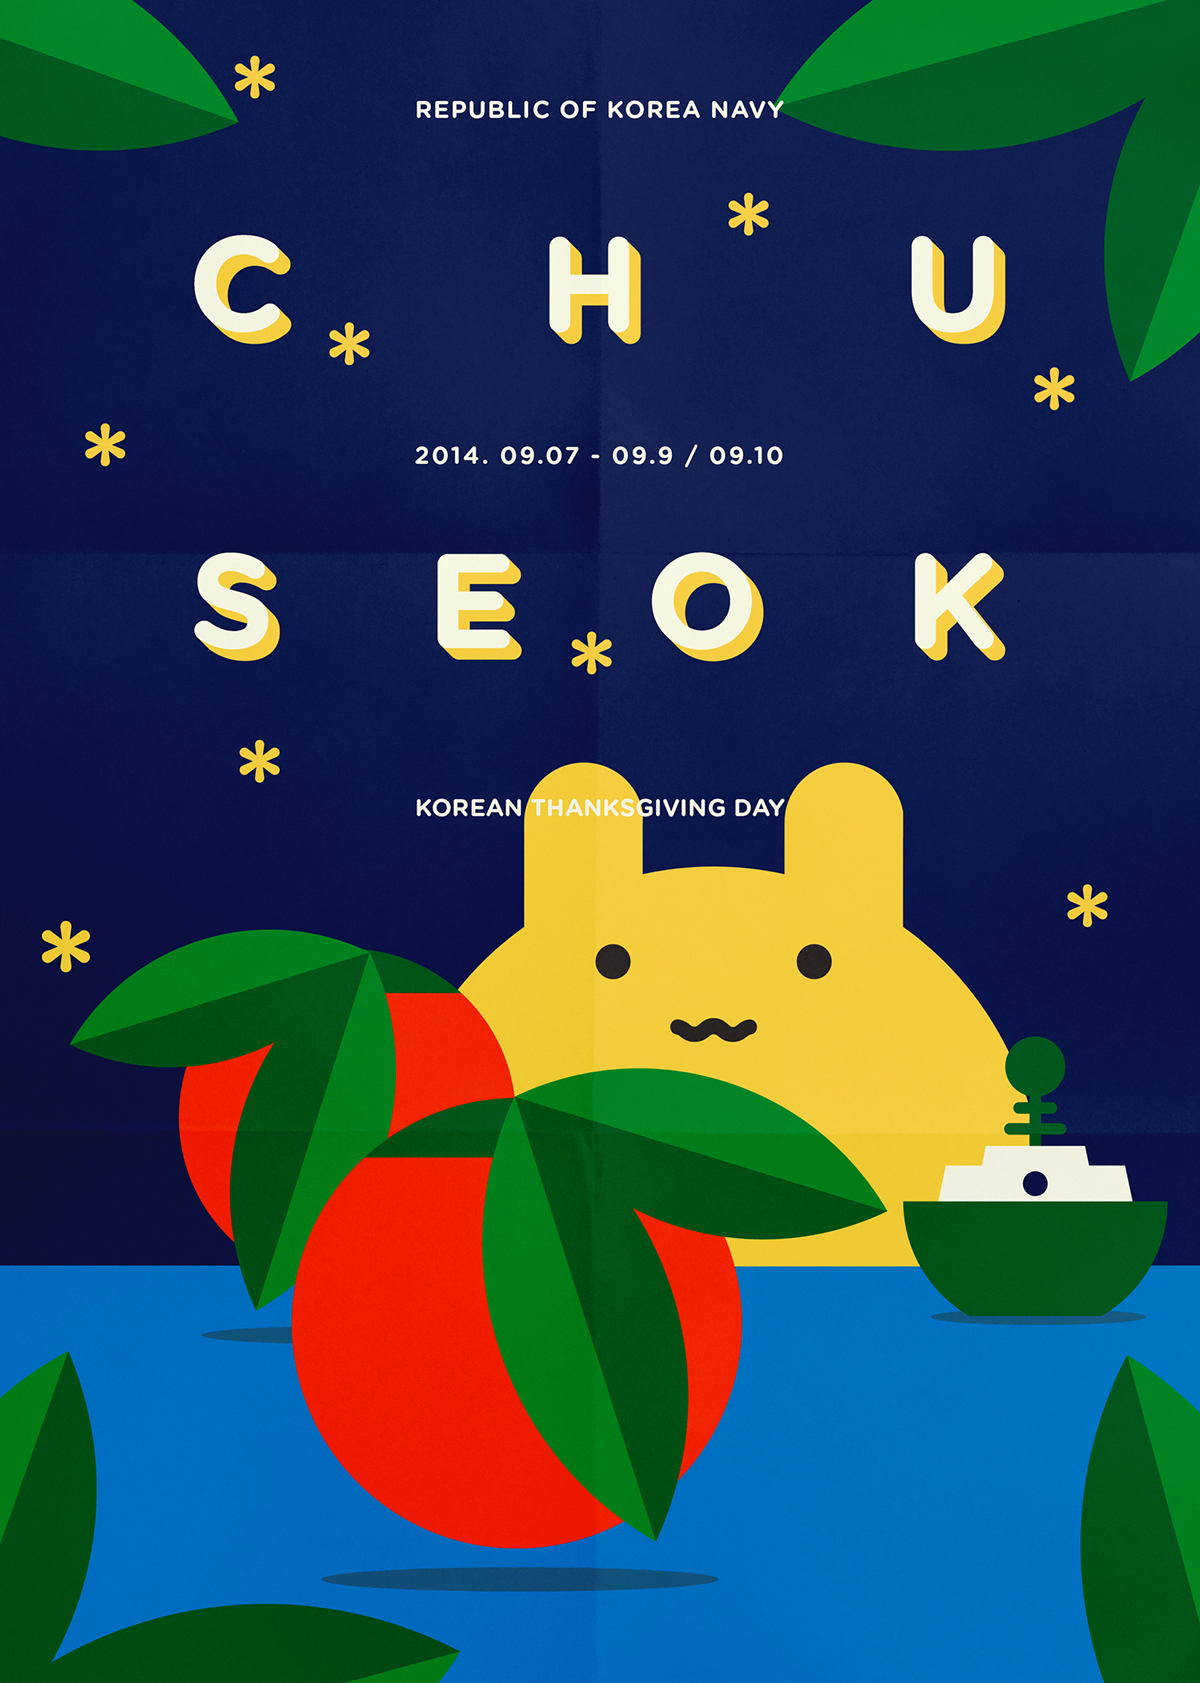 Chu Seok Chu-Seok moon Character navy rokn Republic of Korea pictogram postcard poster 추석 한가위 보름달